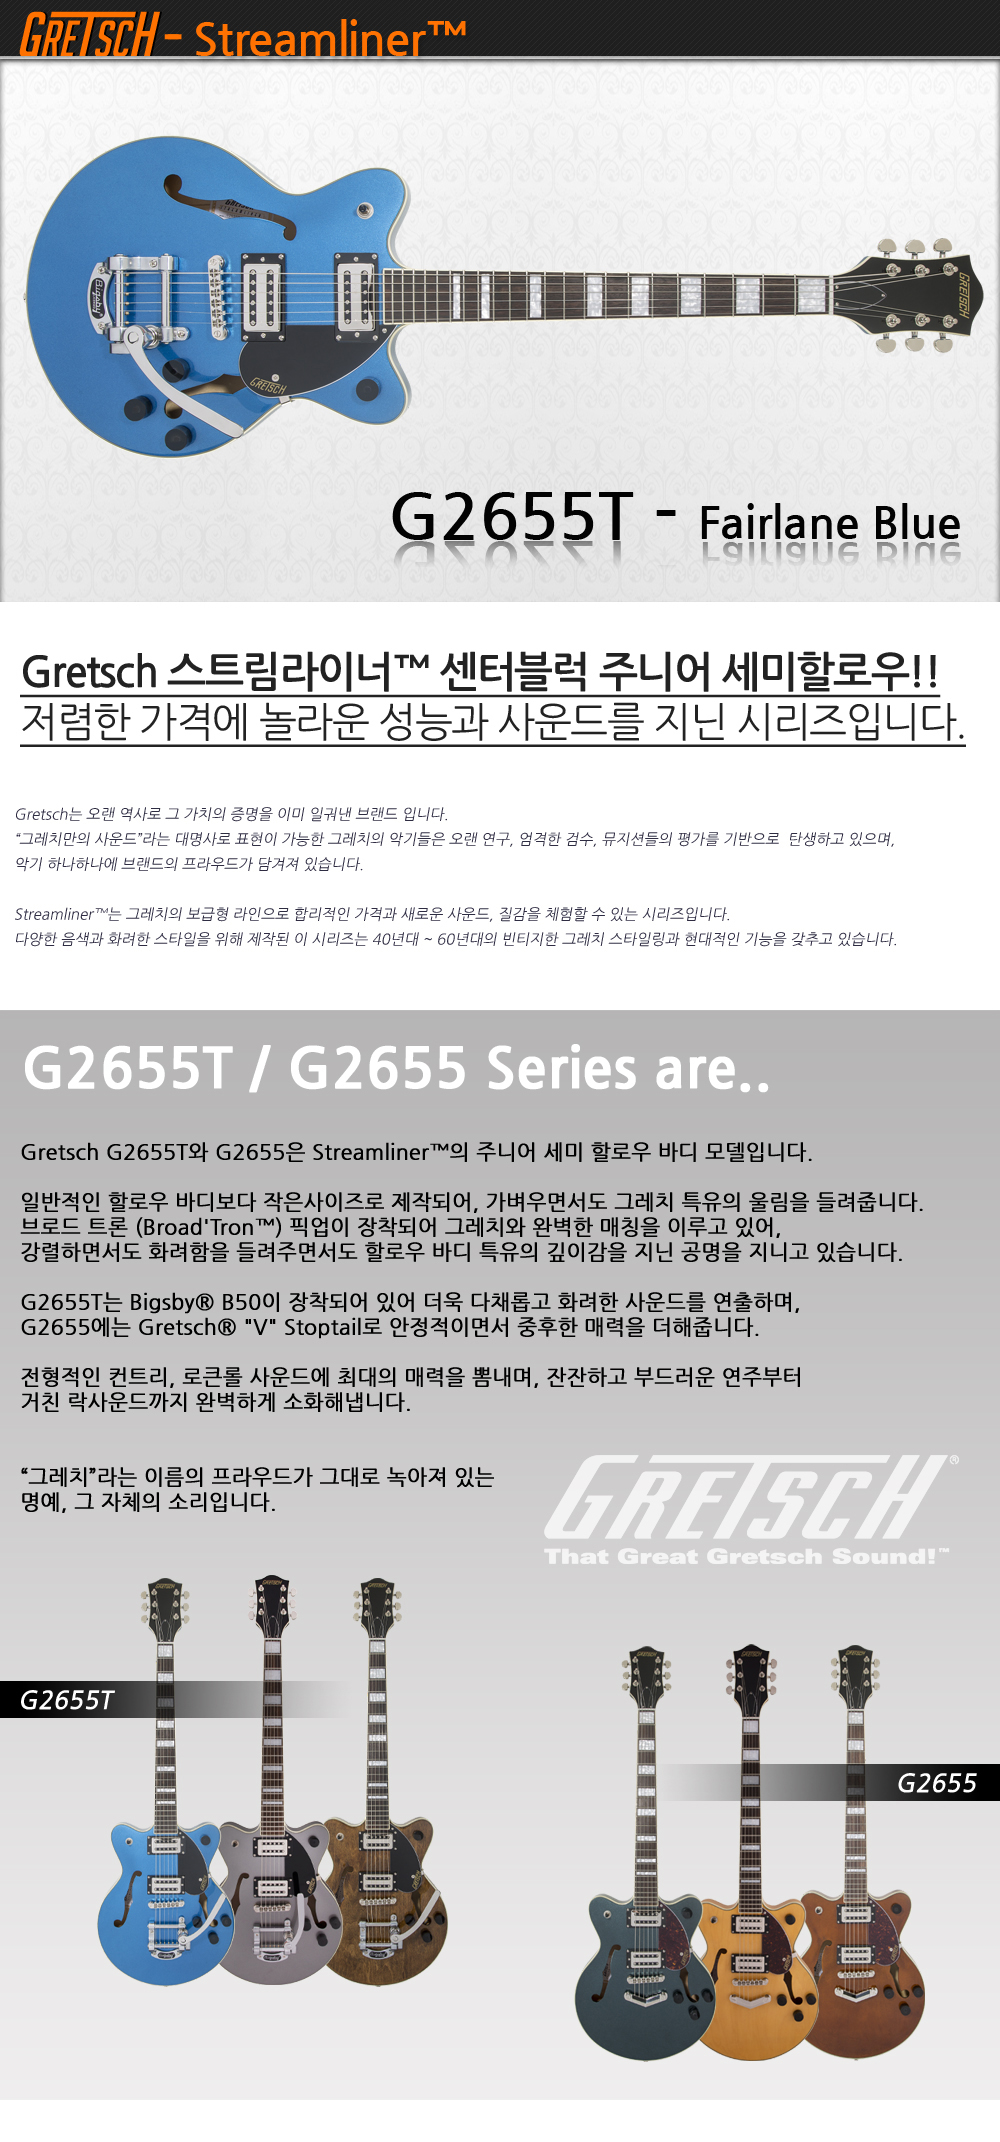 Gretsch-G2655T-FairlaneBlue_1_134021.jpg